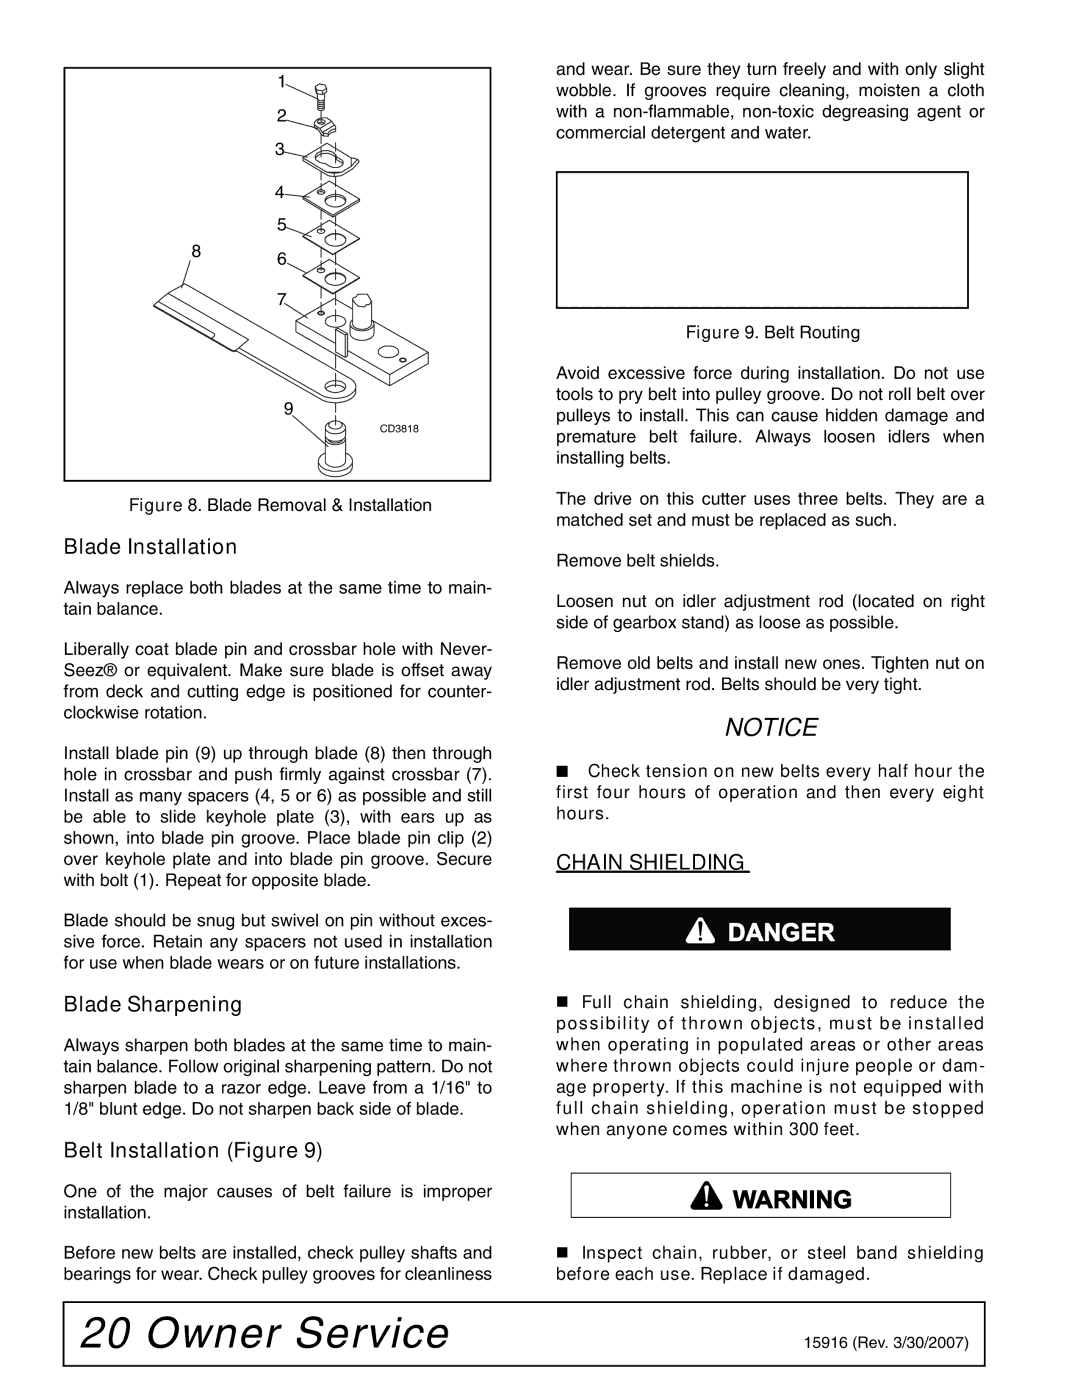 Woods Equipment MDO80-2 manual Blade Installation, Blade Sharpening, Belt Installation Figure, Chain Shielding 